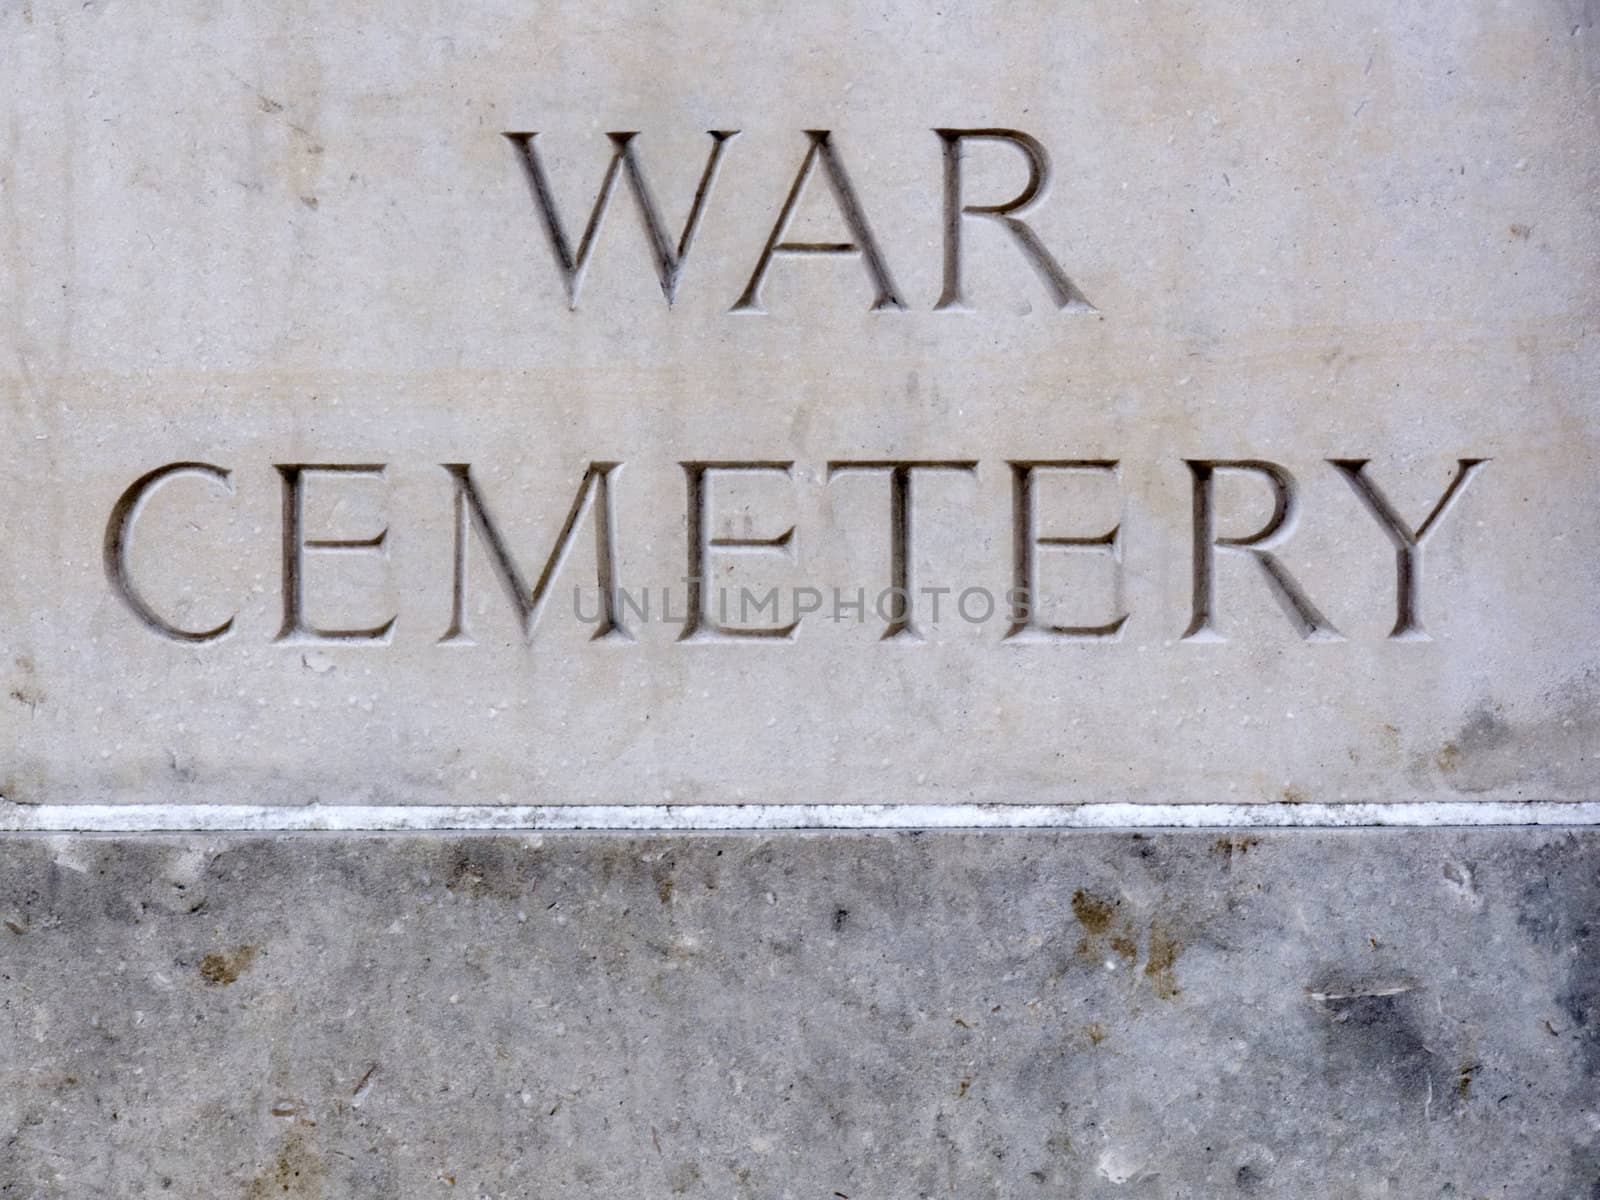 War Cemetery Plaque by devulderj